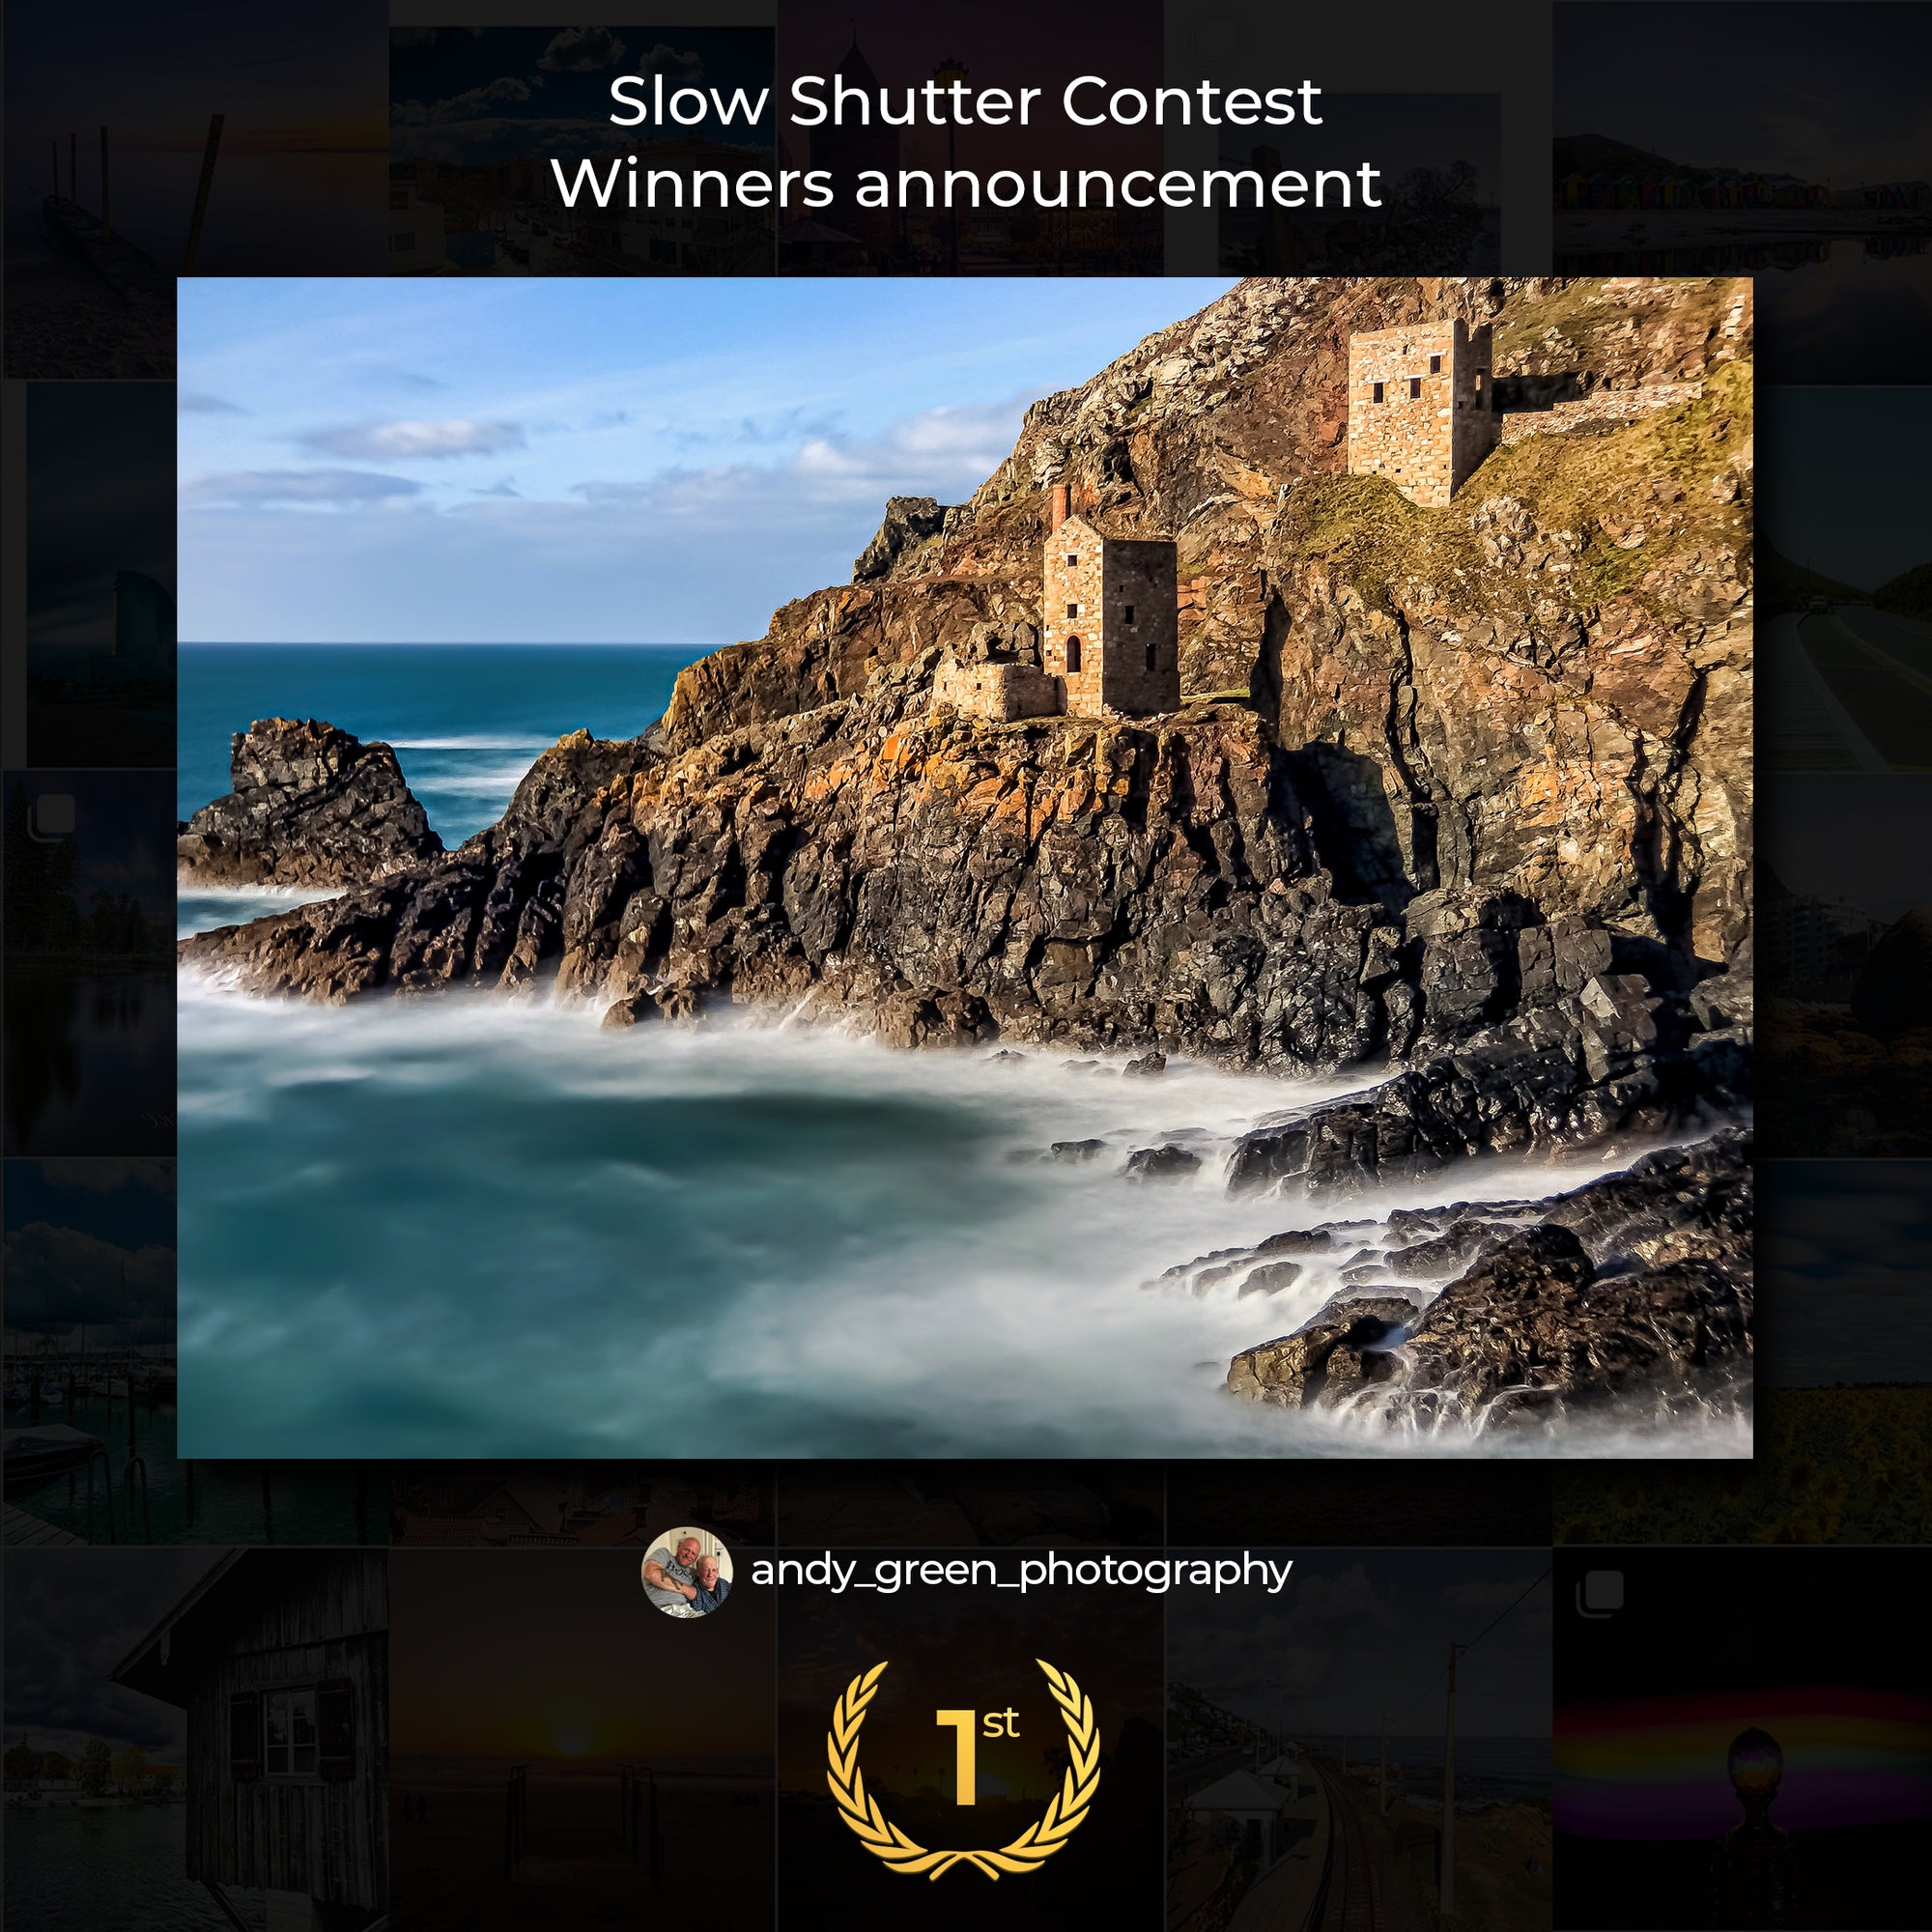 Slow Shutter Contest awarding